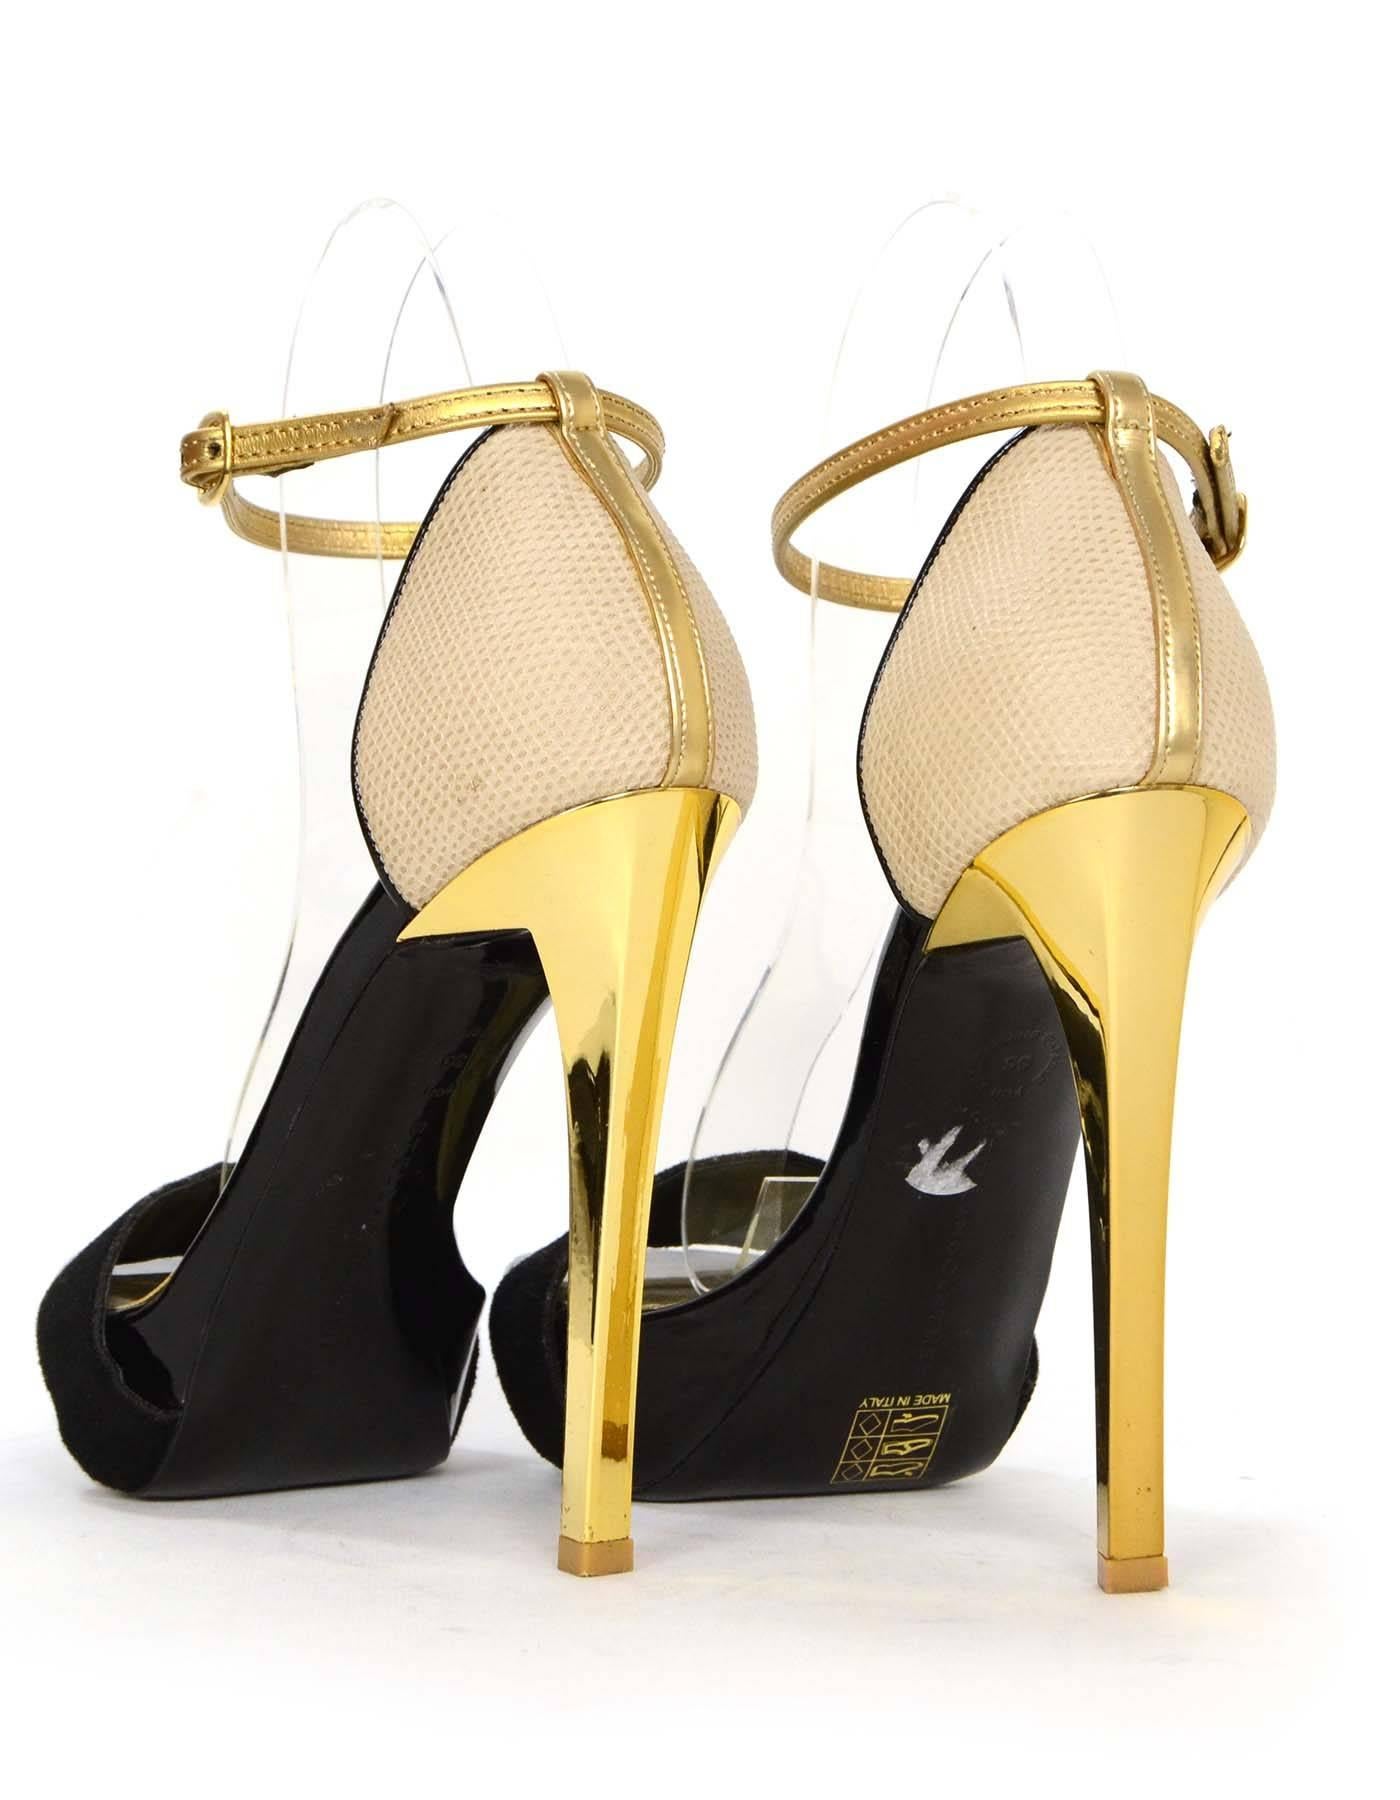 Stella McCartney Black & Gold Platform Sandals sz 36 1